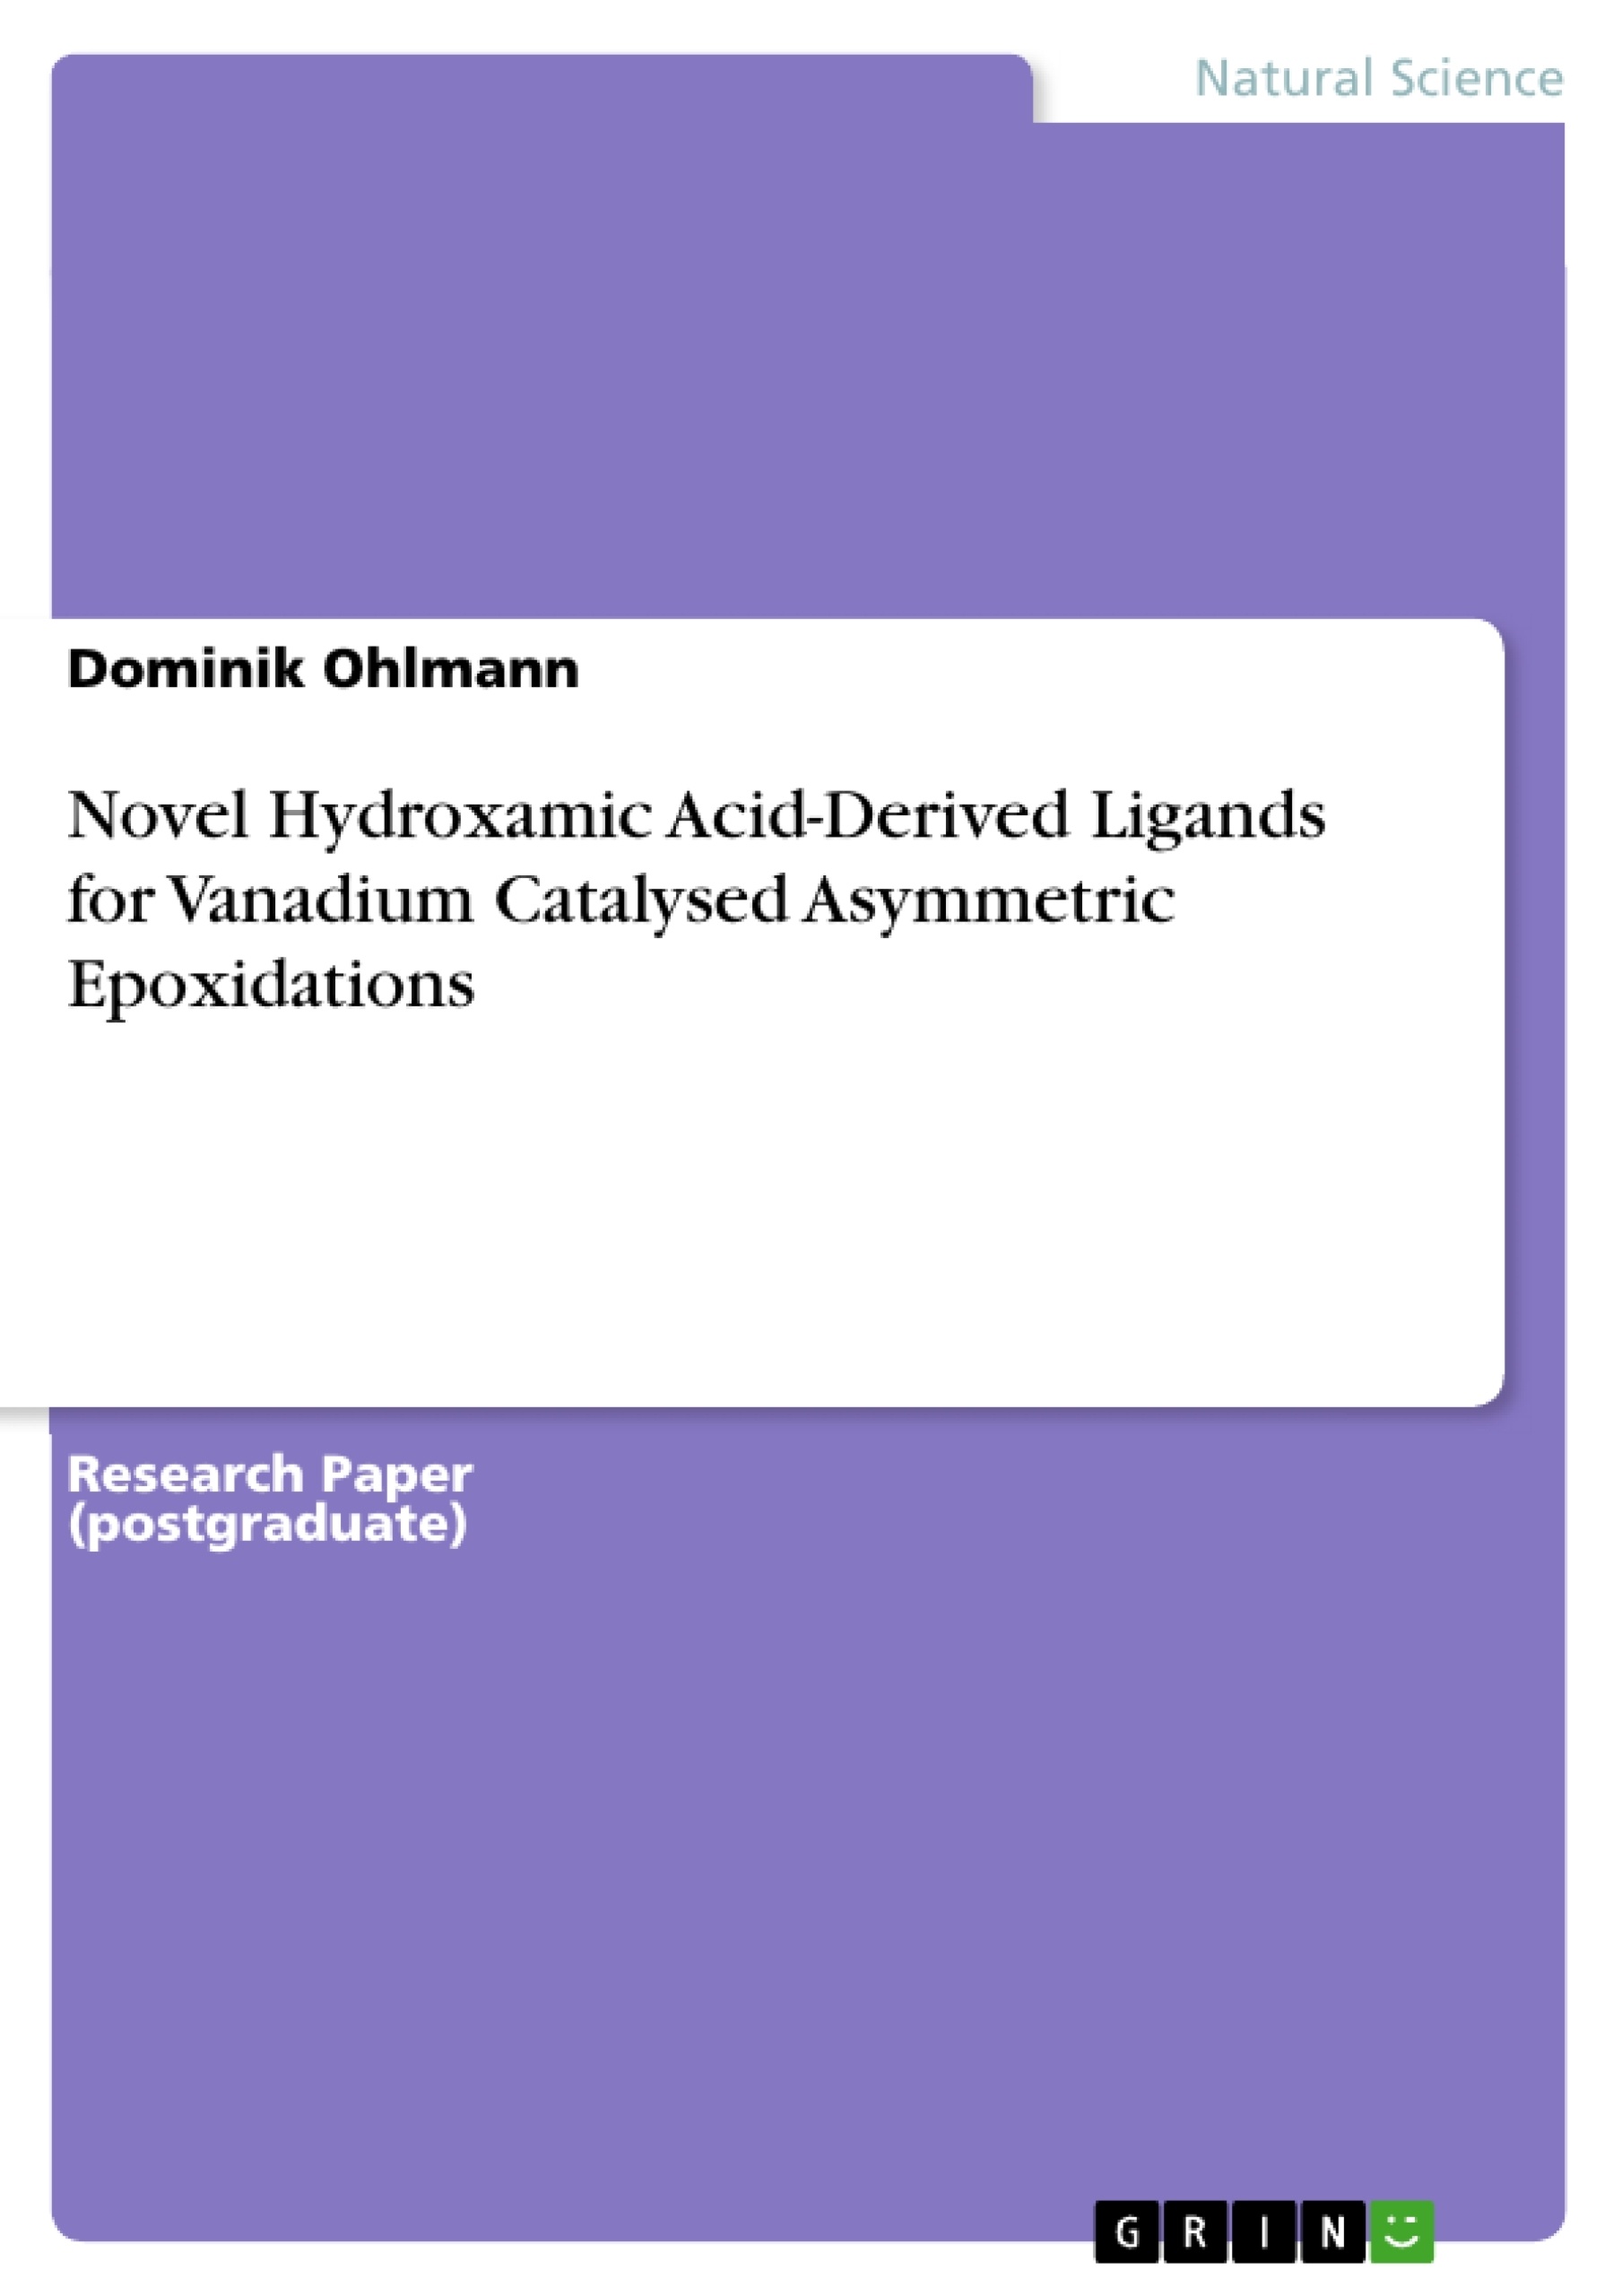 Title: Novel Hydroxamic Acid-Derived Ligands for Vanadium Catalysed Asymmetric Epoxidations